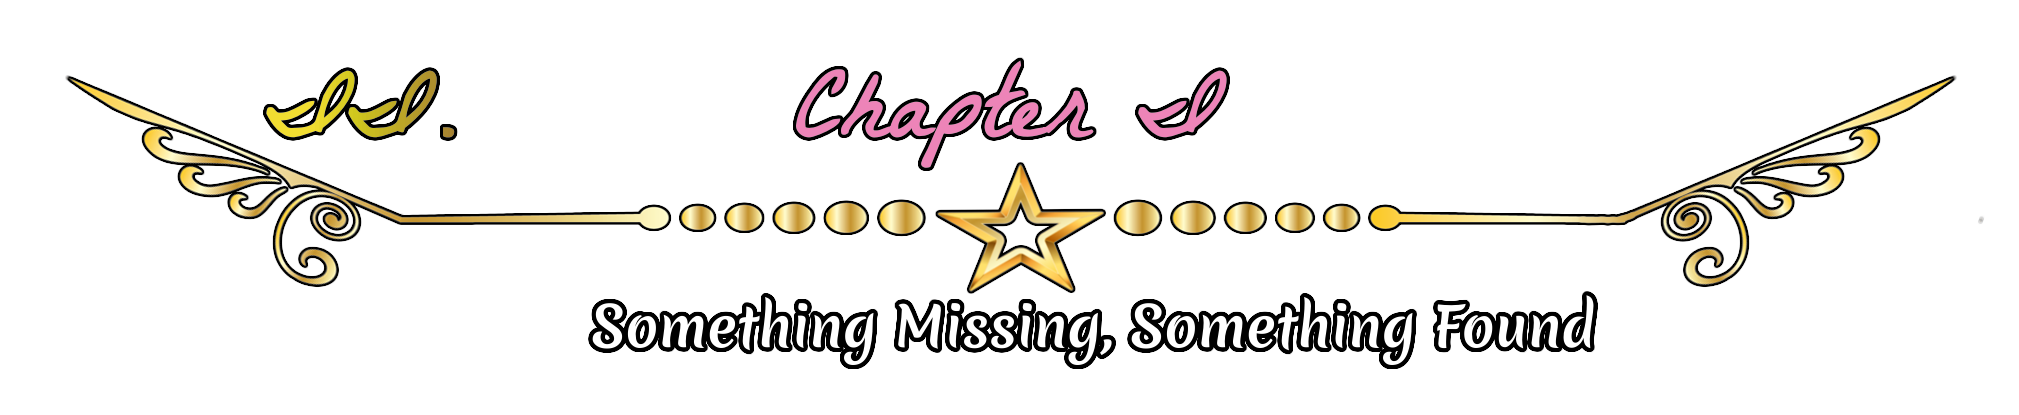 Arc 2 - Chapter I - Something Missing, Something Found